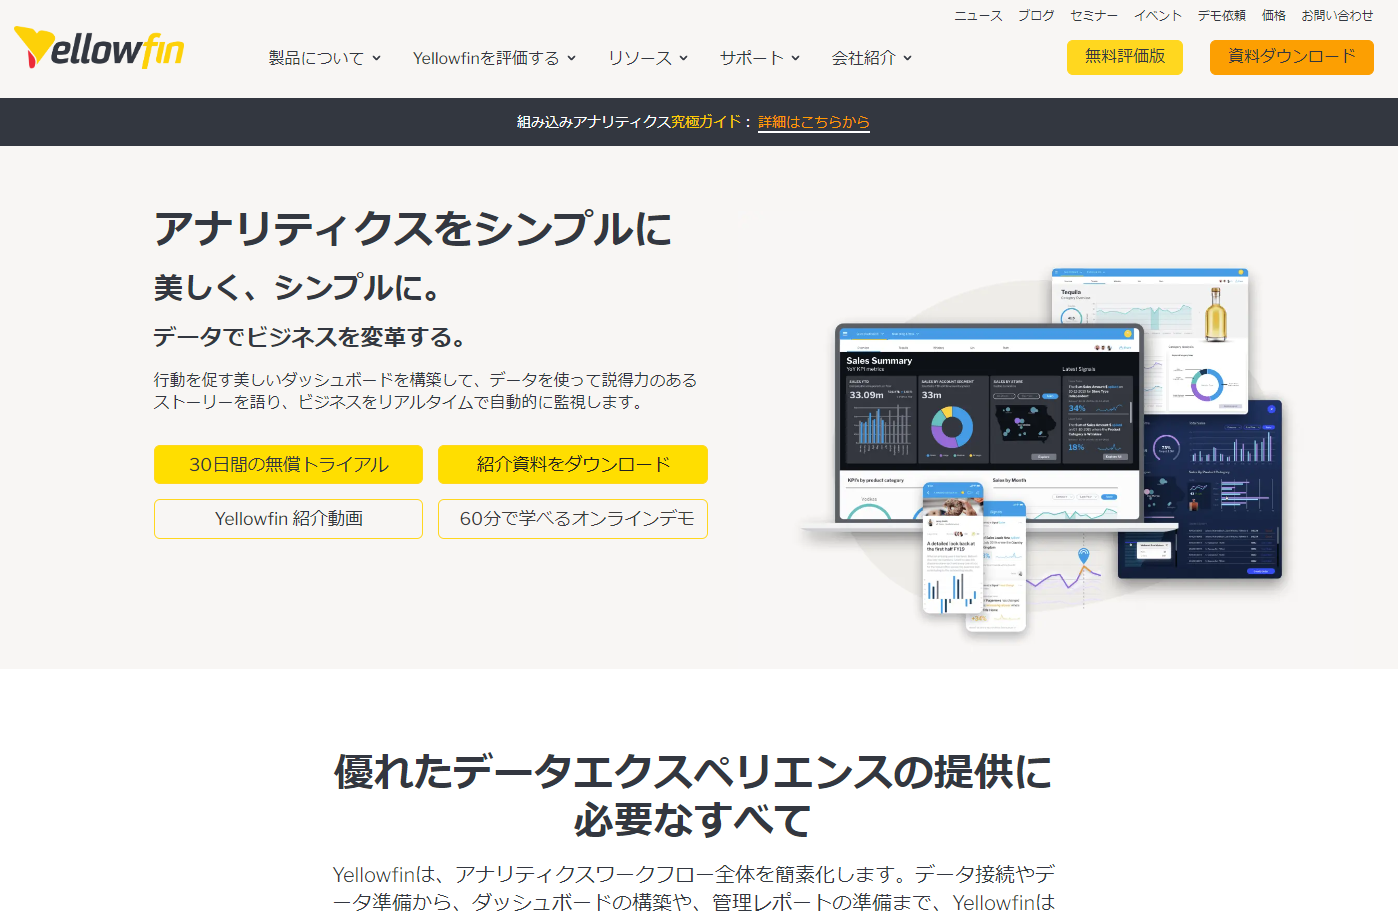 Yellowfin Japanがオンラインセミナー「Yellowfinオンラインデモ」を開催へ